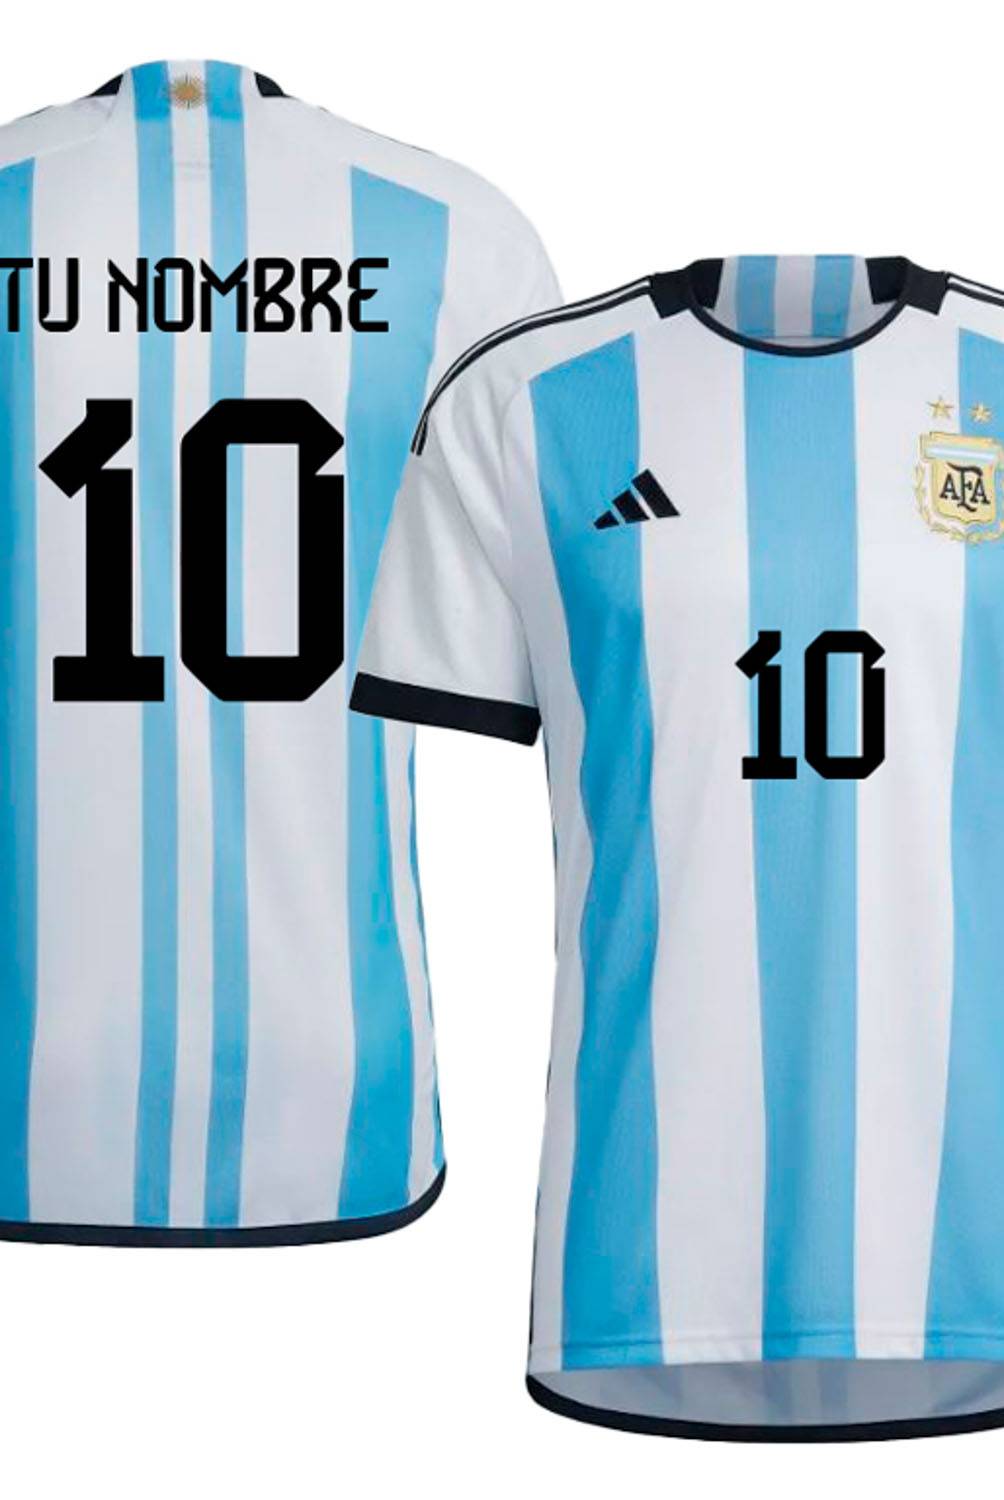 ADIDAS - Camiseta De Fútbol Personificable Argentina Local Hombre Adidas